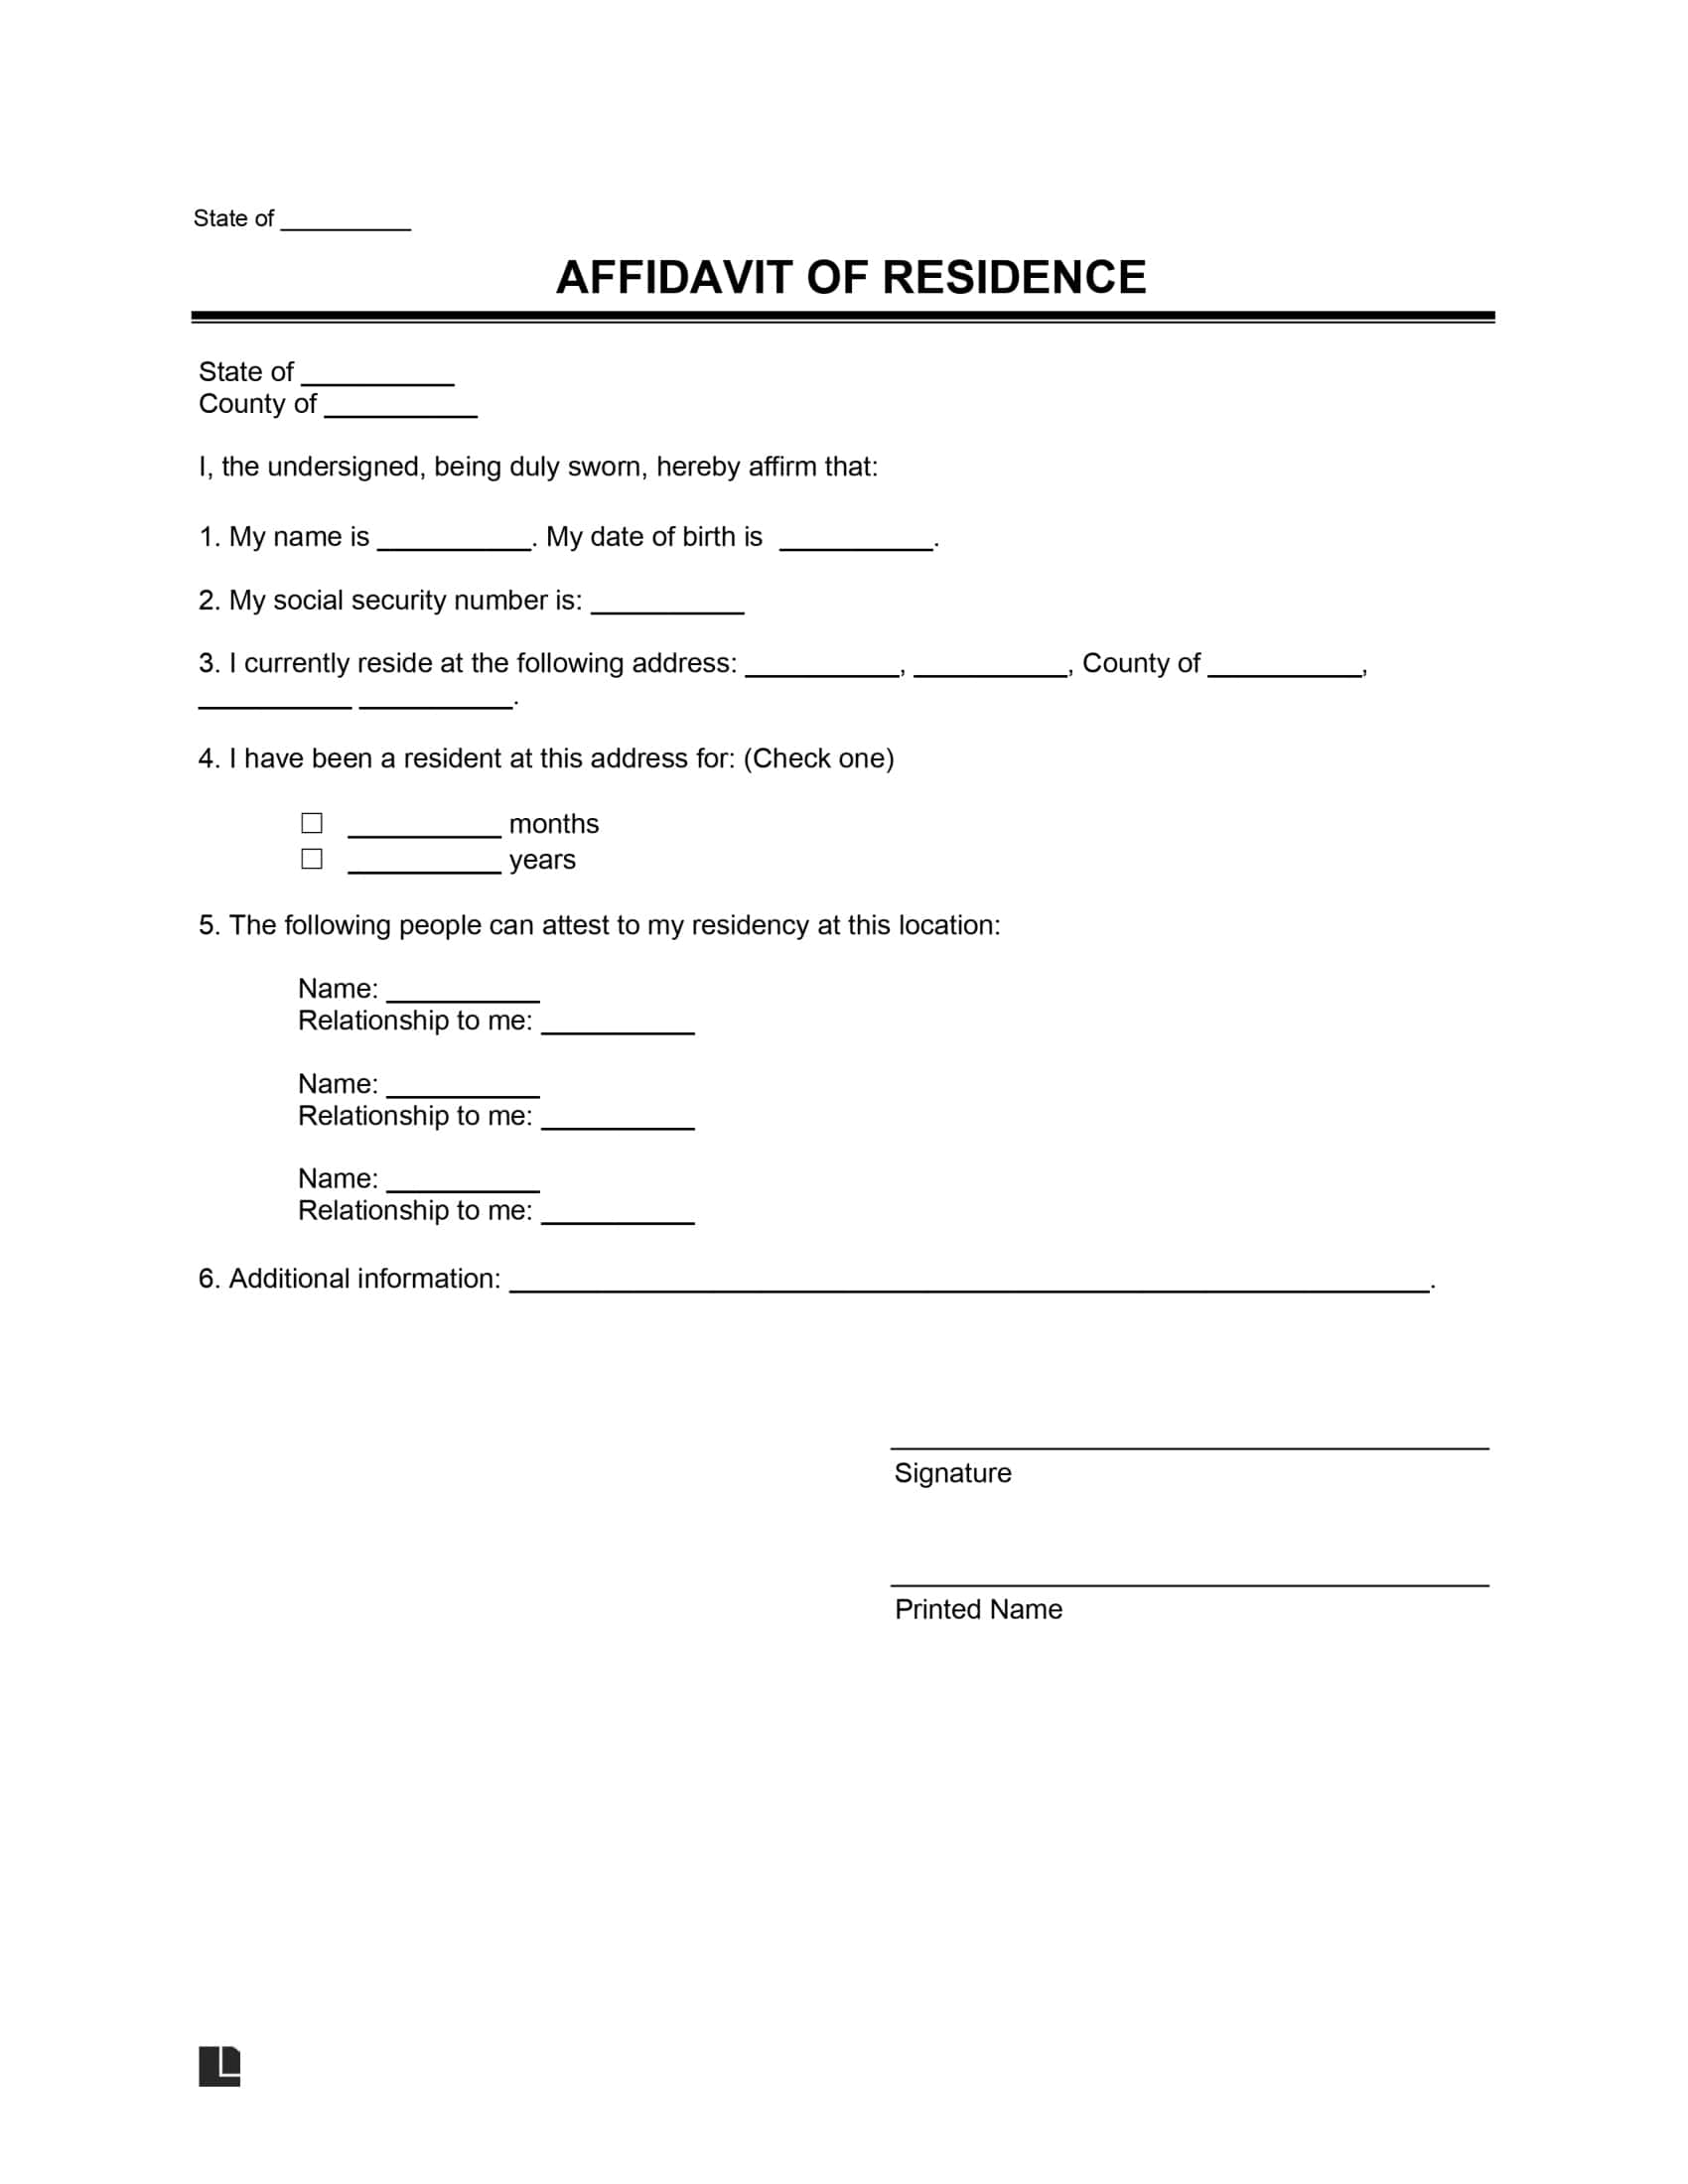 Affidavit of Residence Template